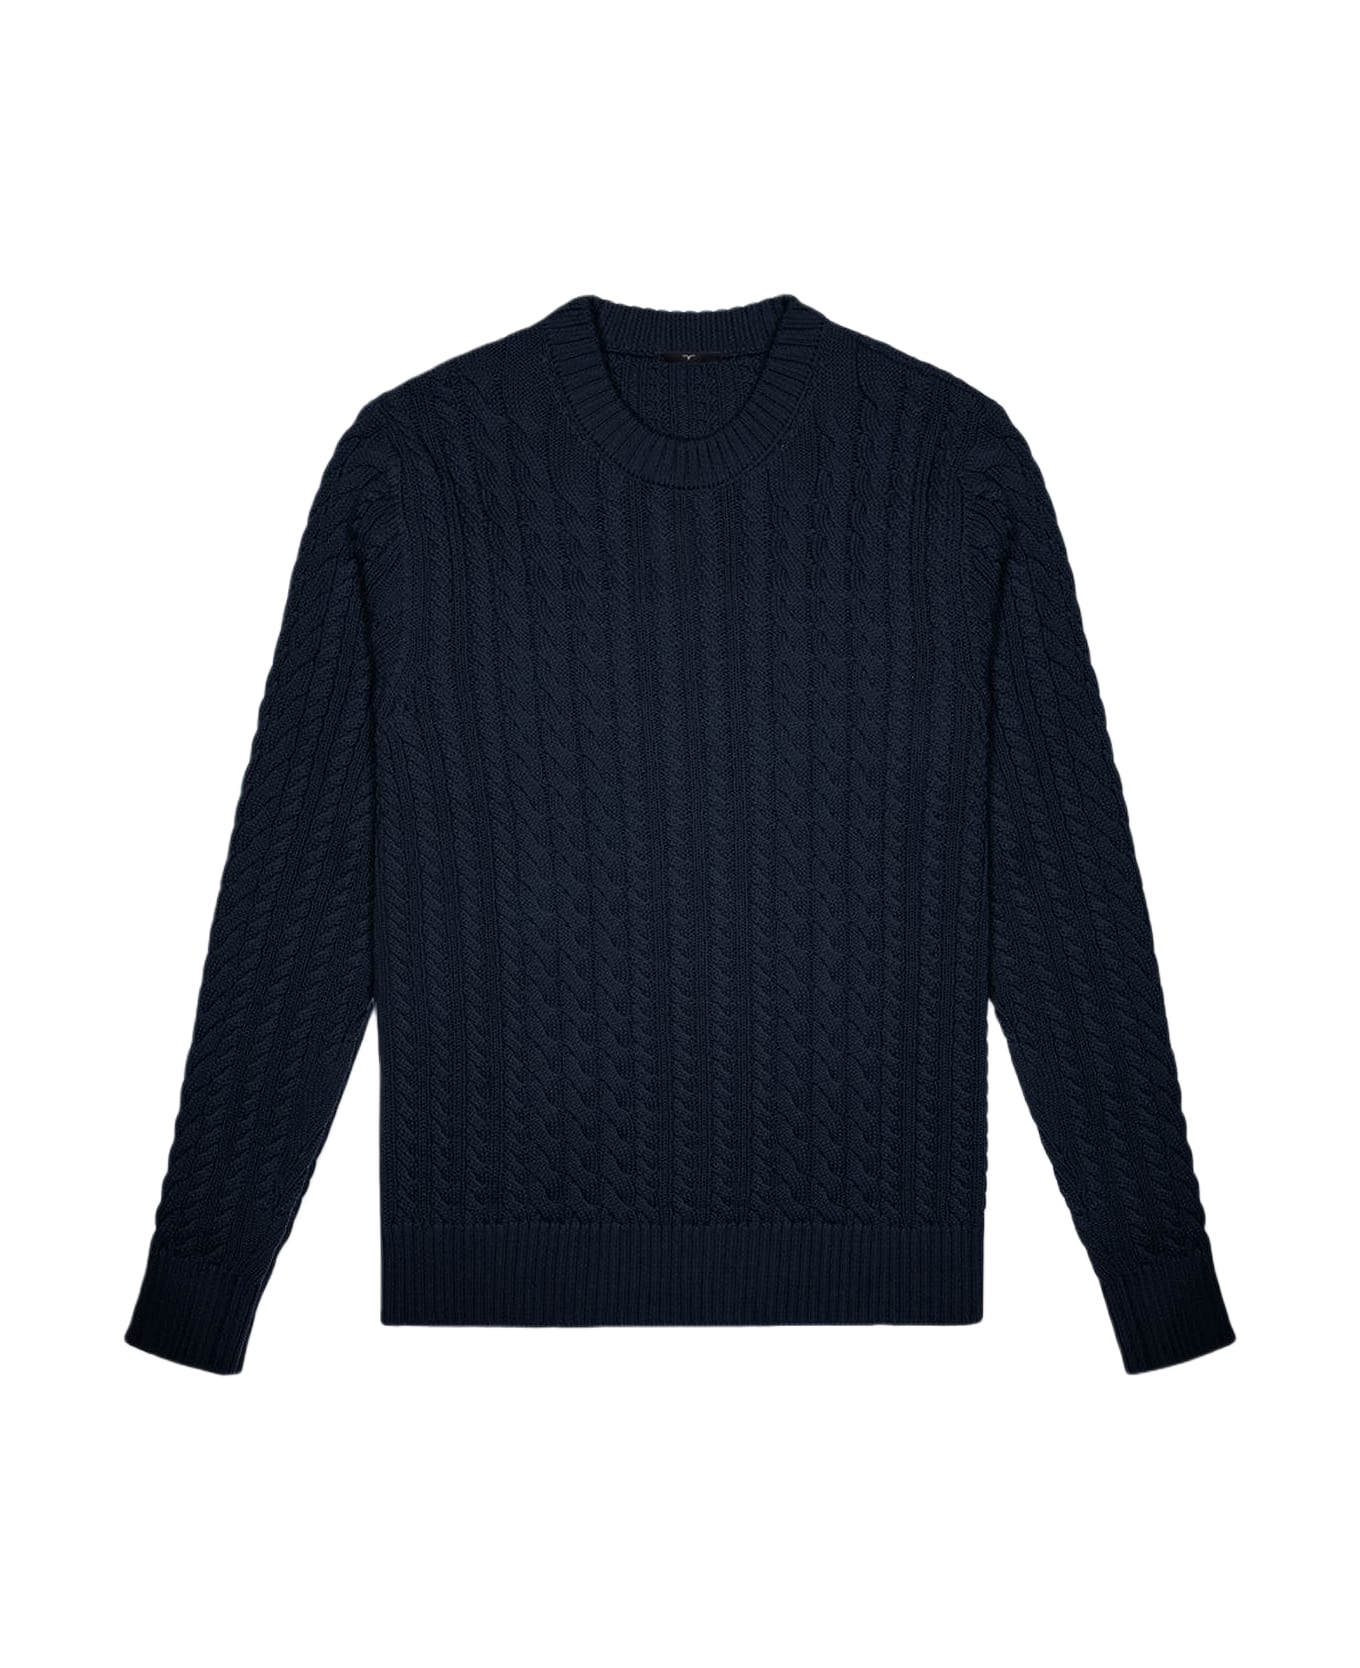 Larusmiani Sweater 'brody' Sweater - Navy